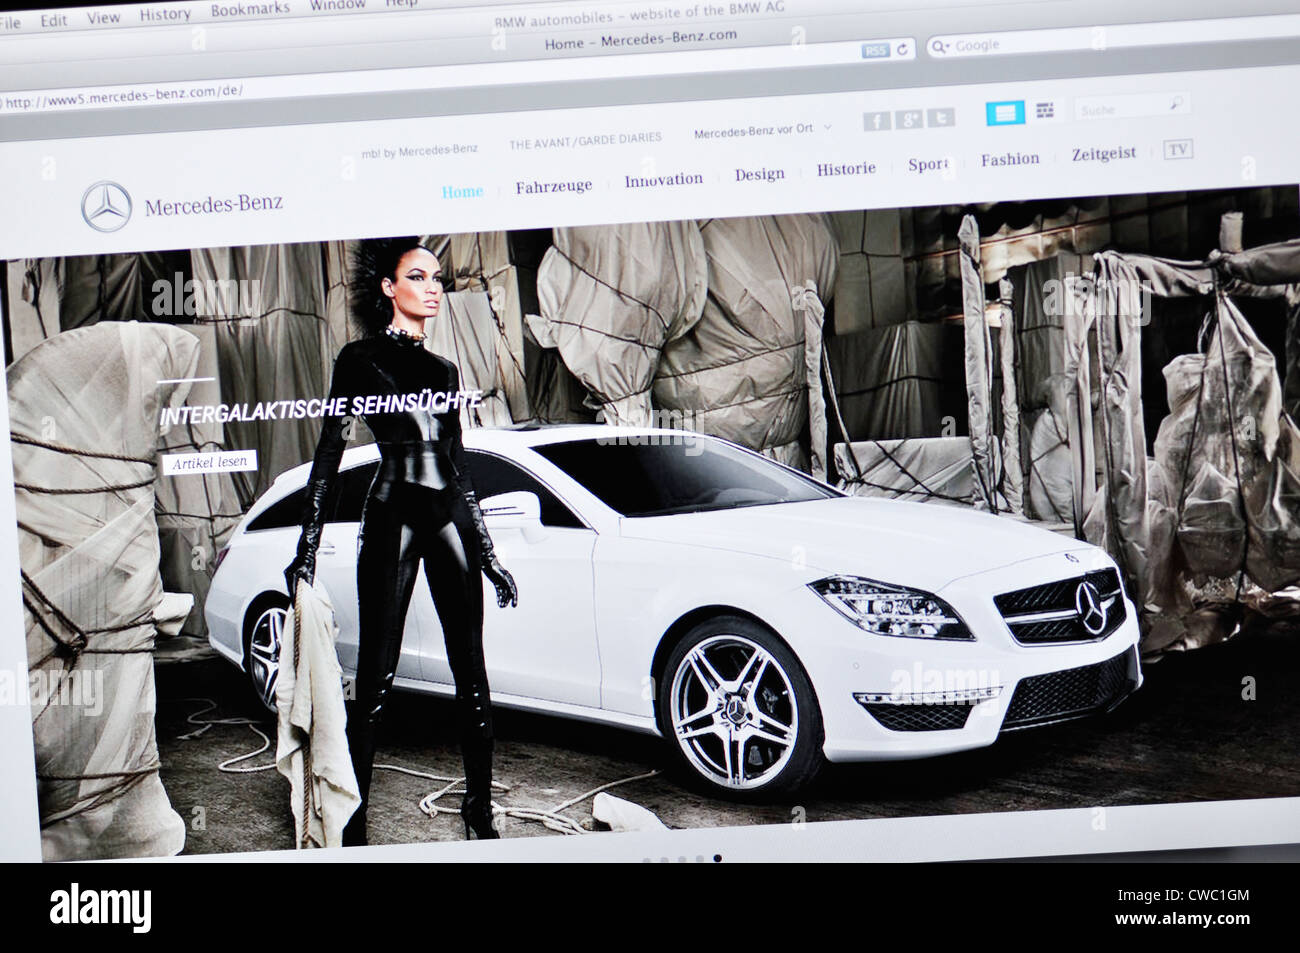 Mercedes Benz website - car manufacturer Stock Photo